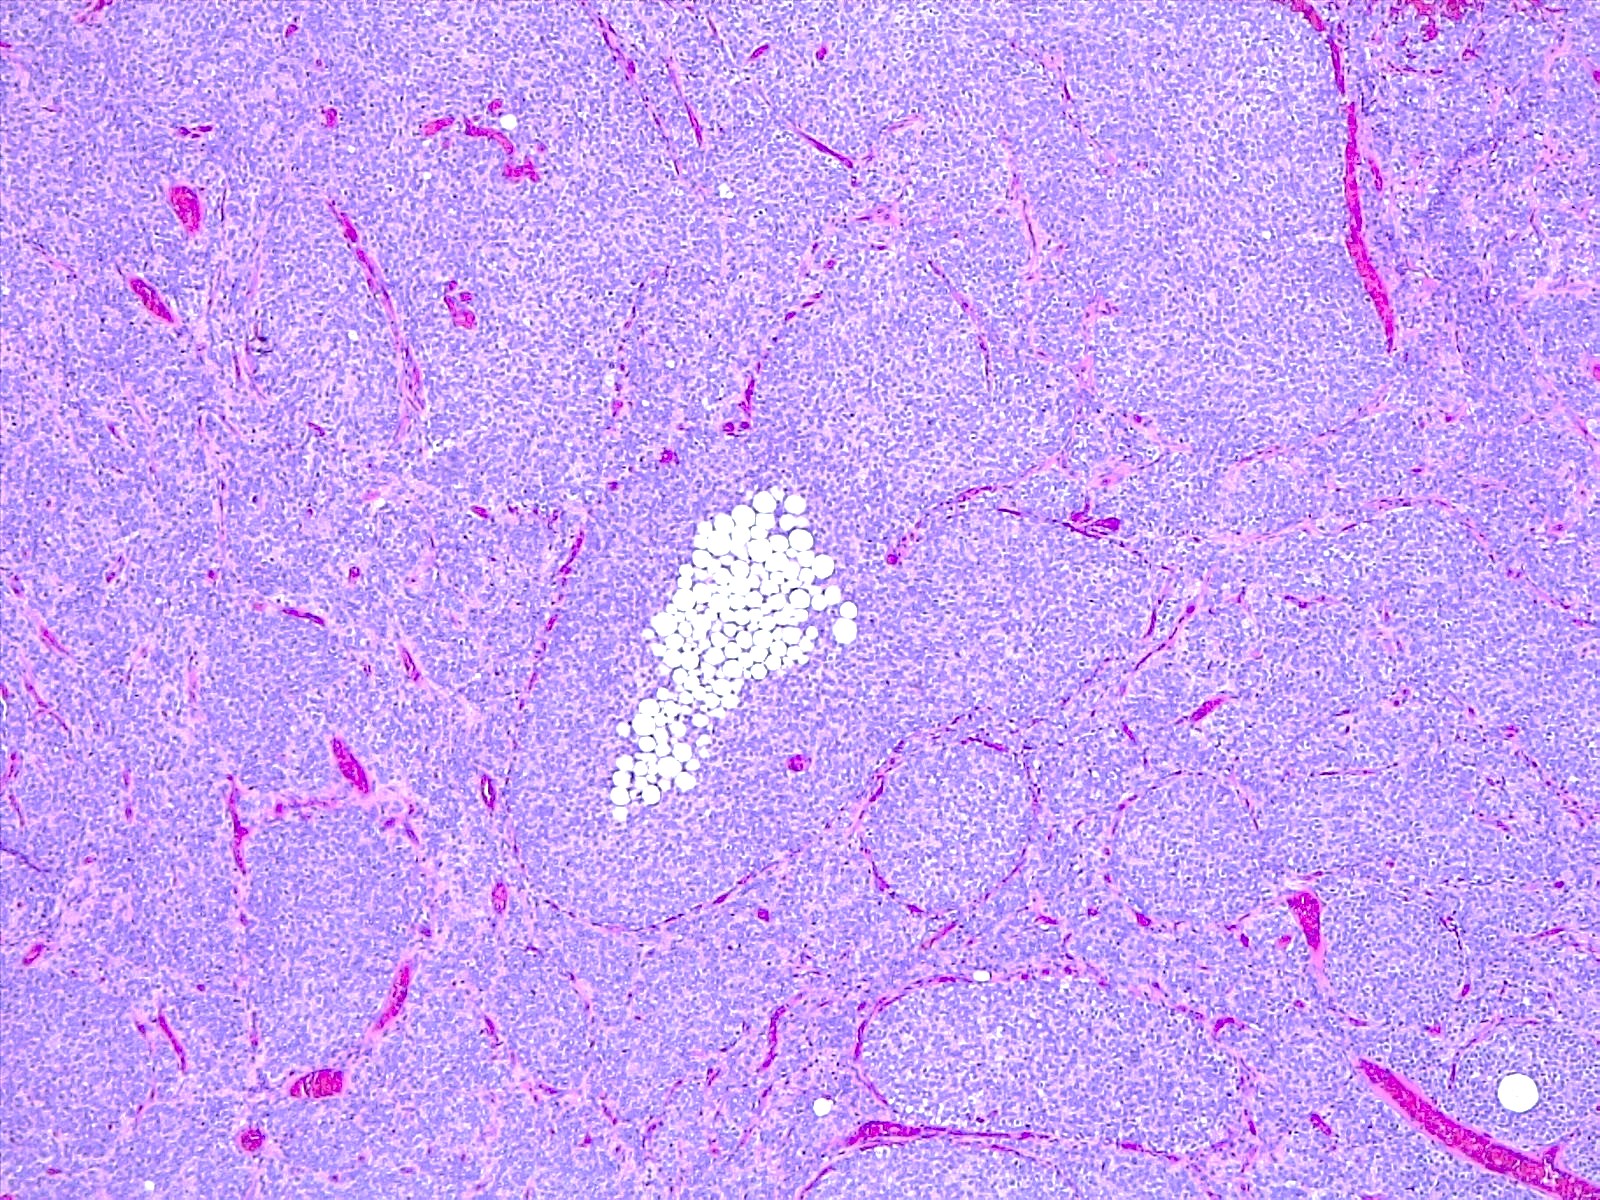 Pathology Outlines - Cerebellar liponeurocytoma